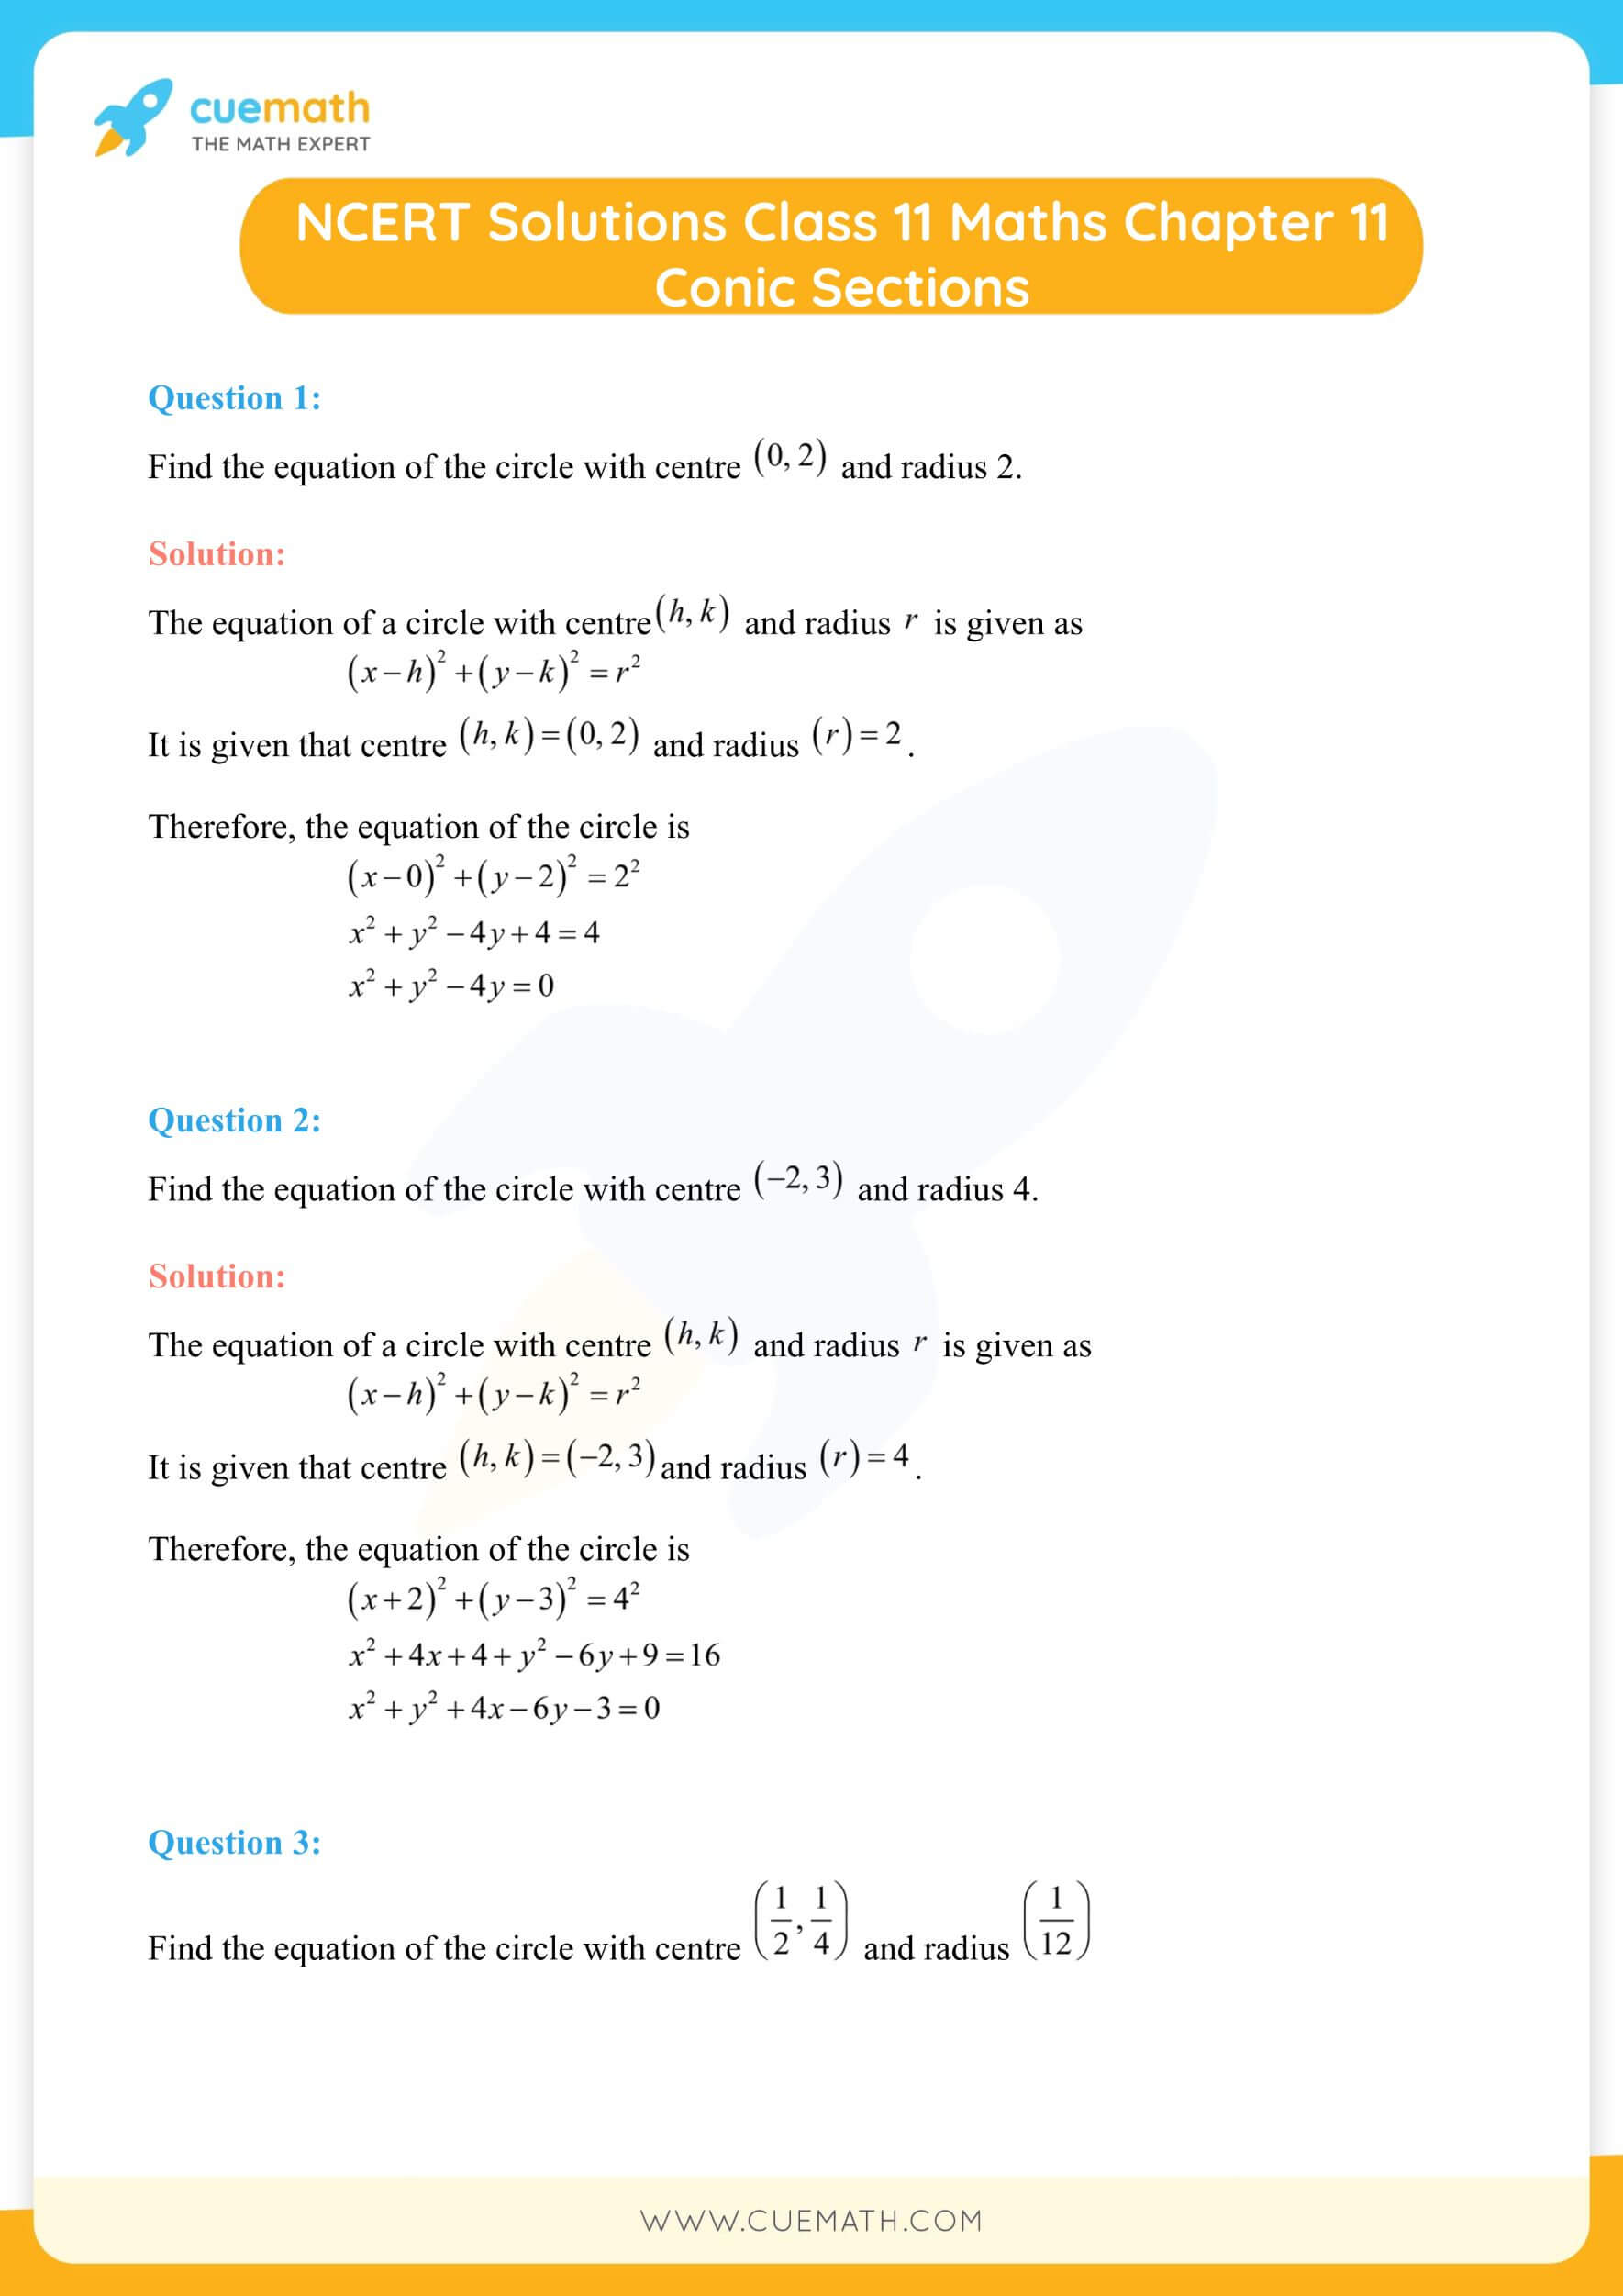 NCERT Solutions Class 11 Maths Chapter 11 Exercise 11.1 1